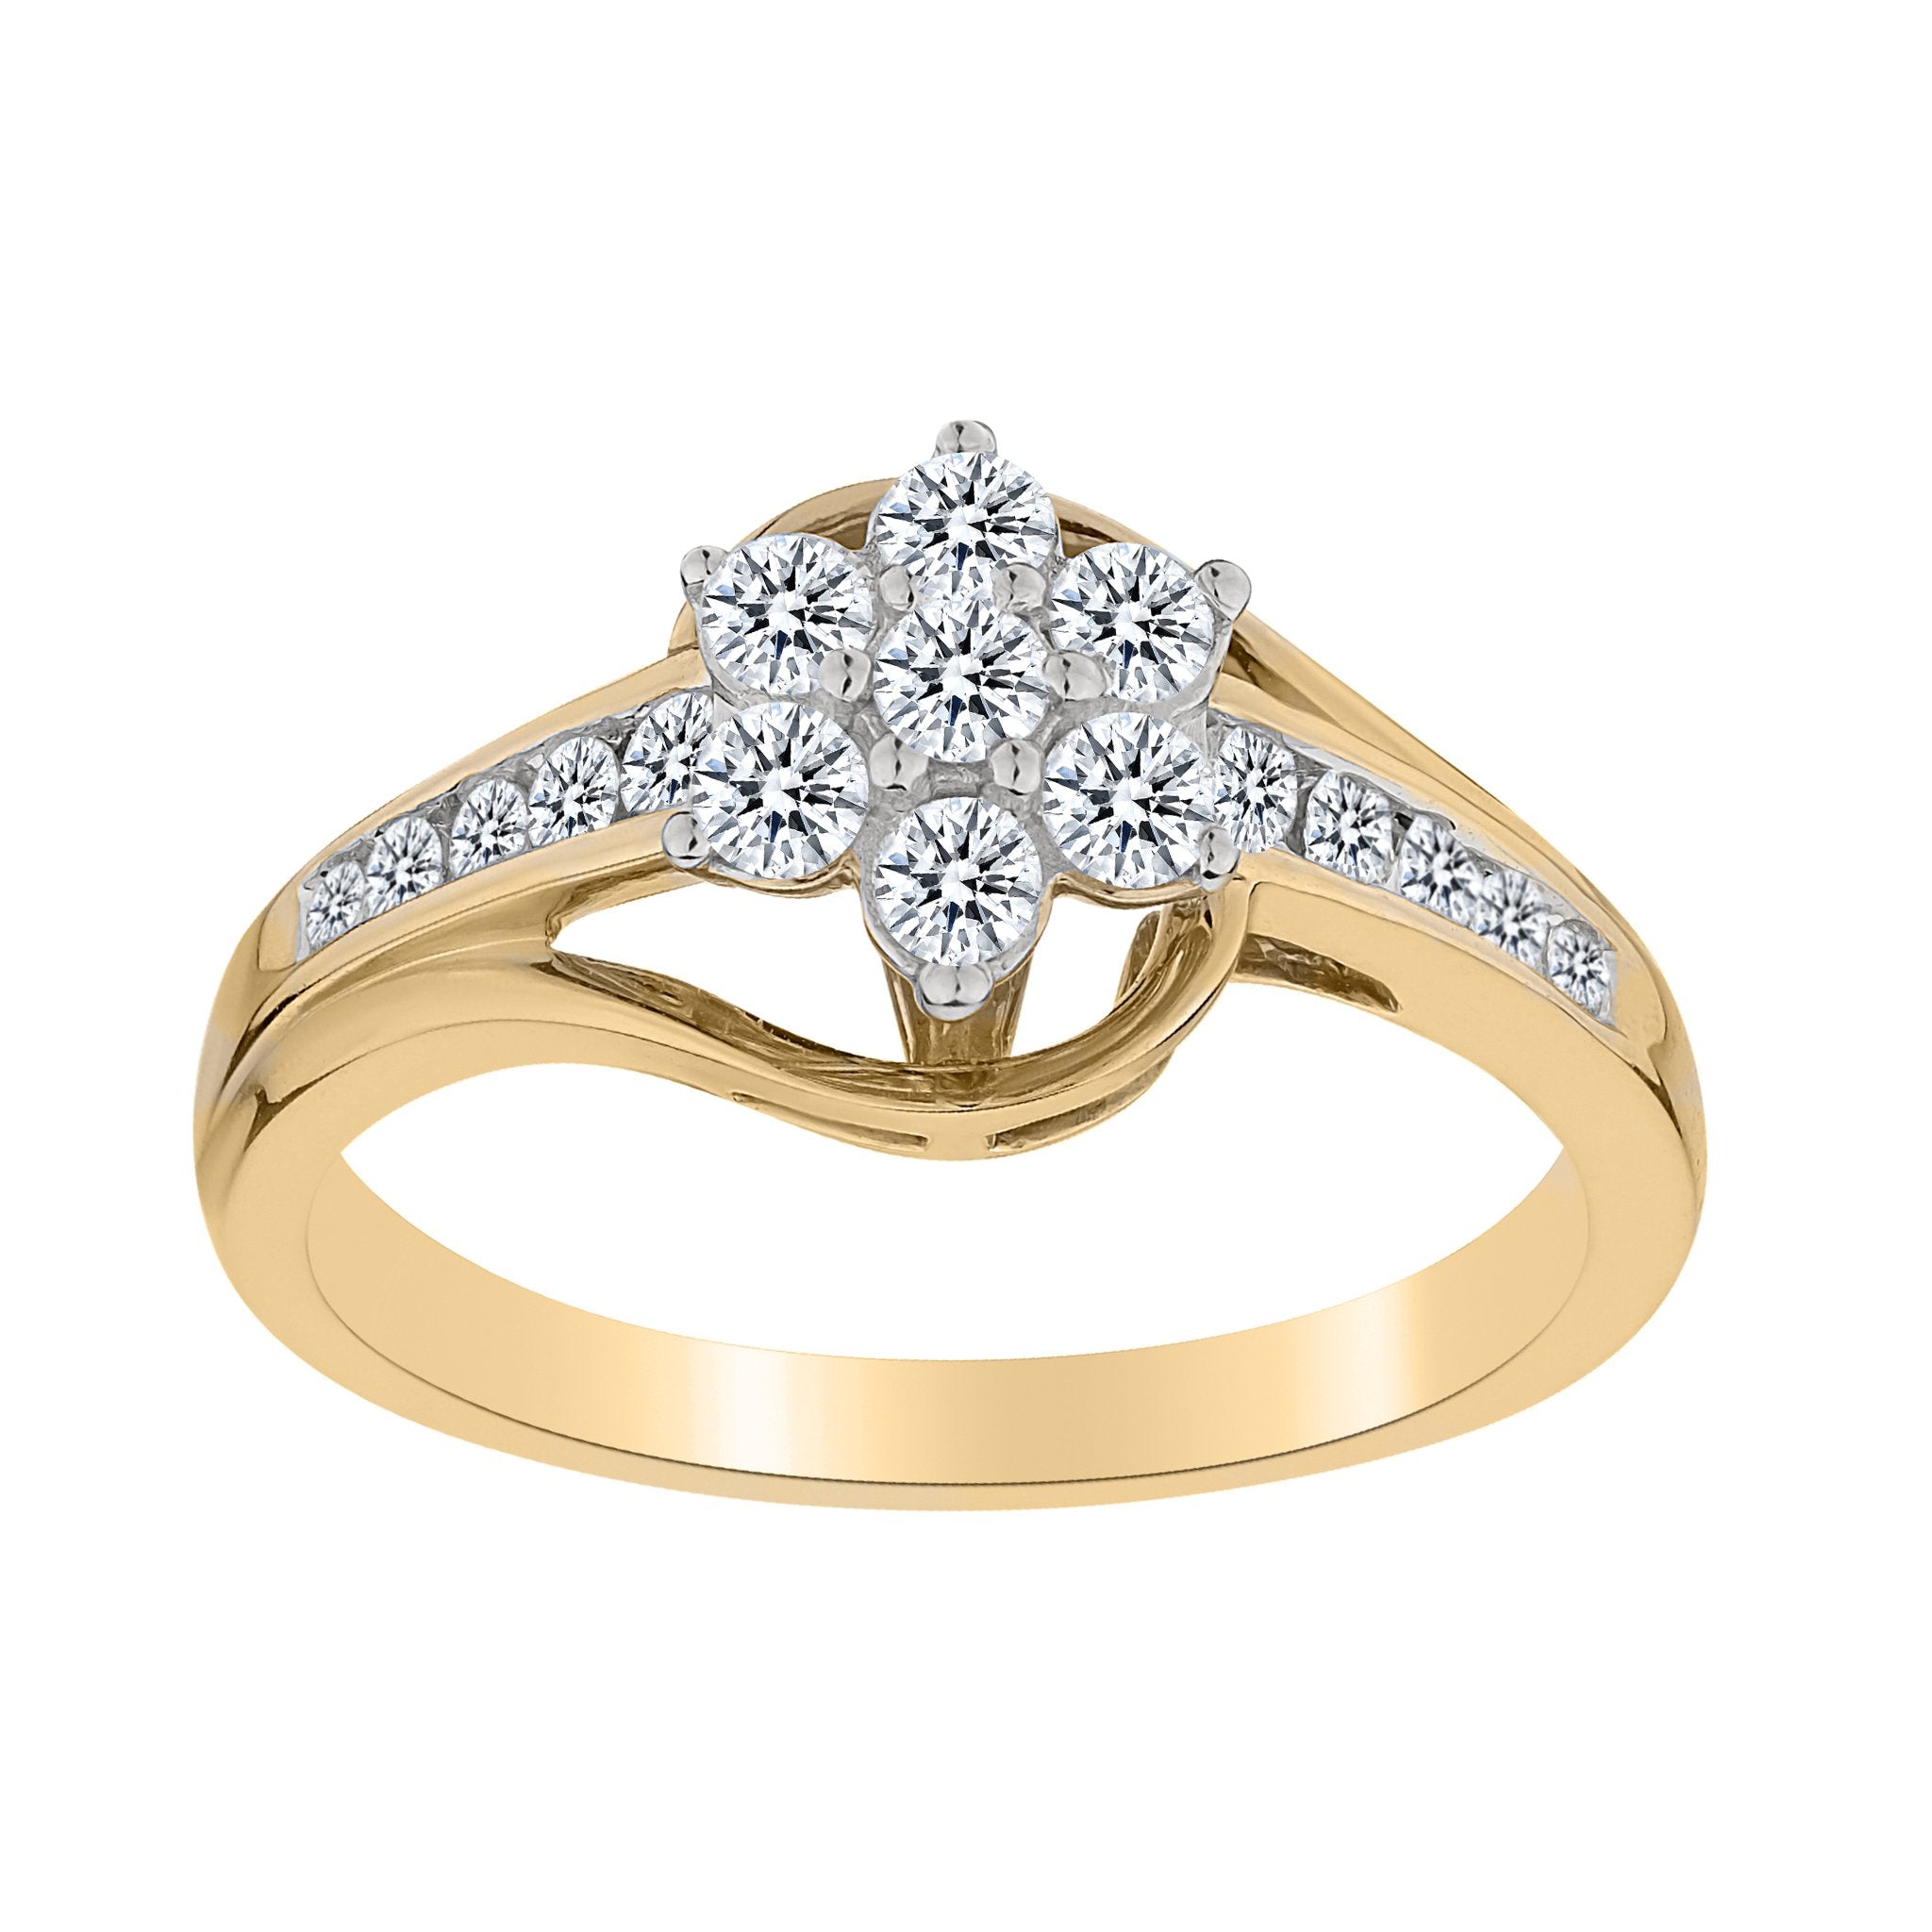 .75 CARAT DIAMOND RING, 10kt YELLOW GOLD - Griffin Jewellery Designs